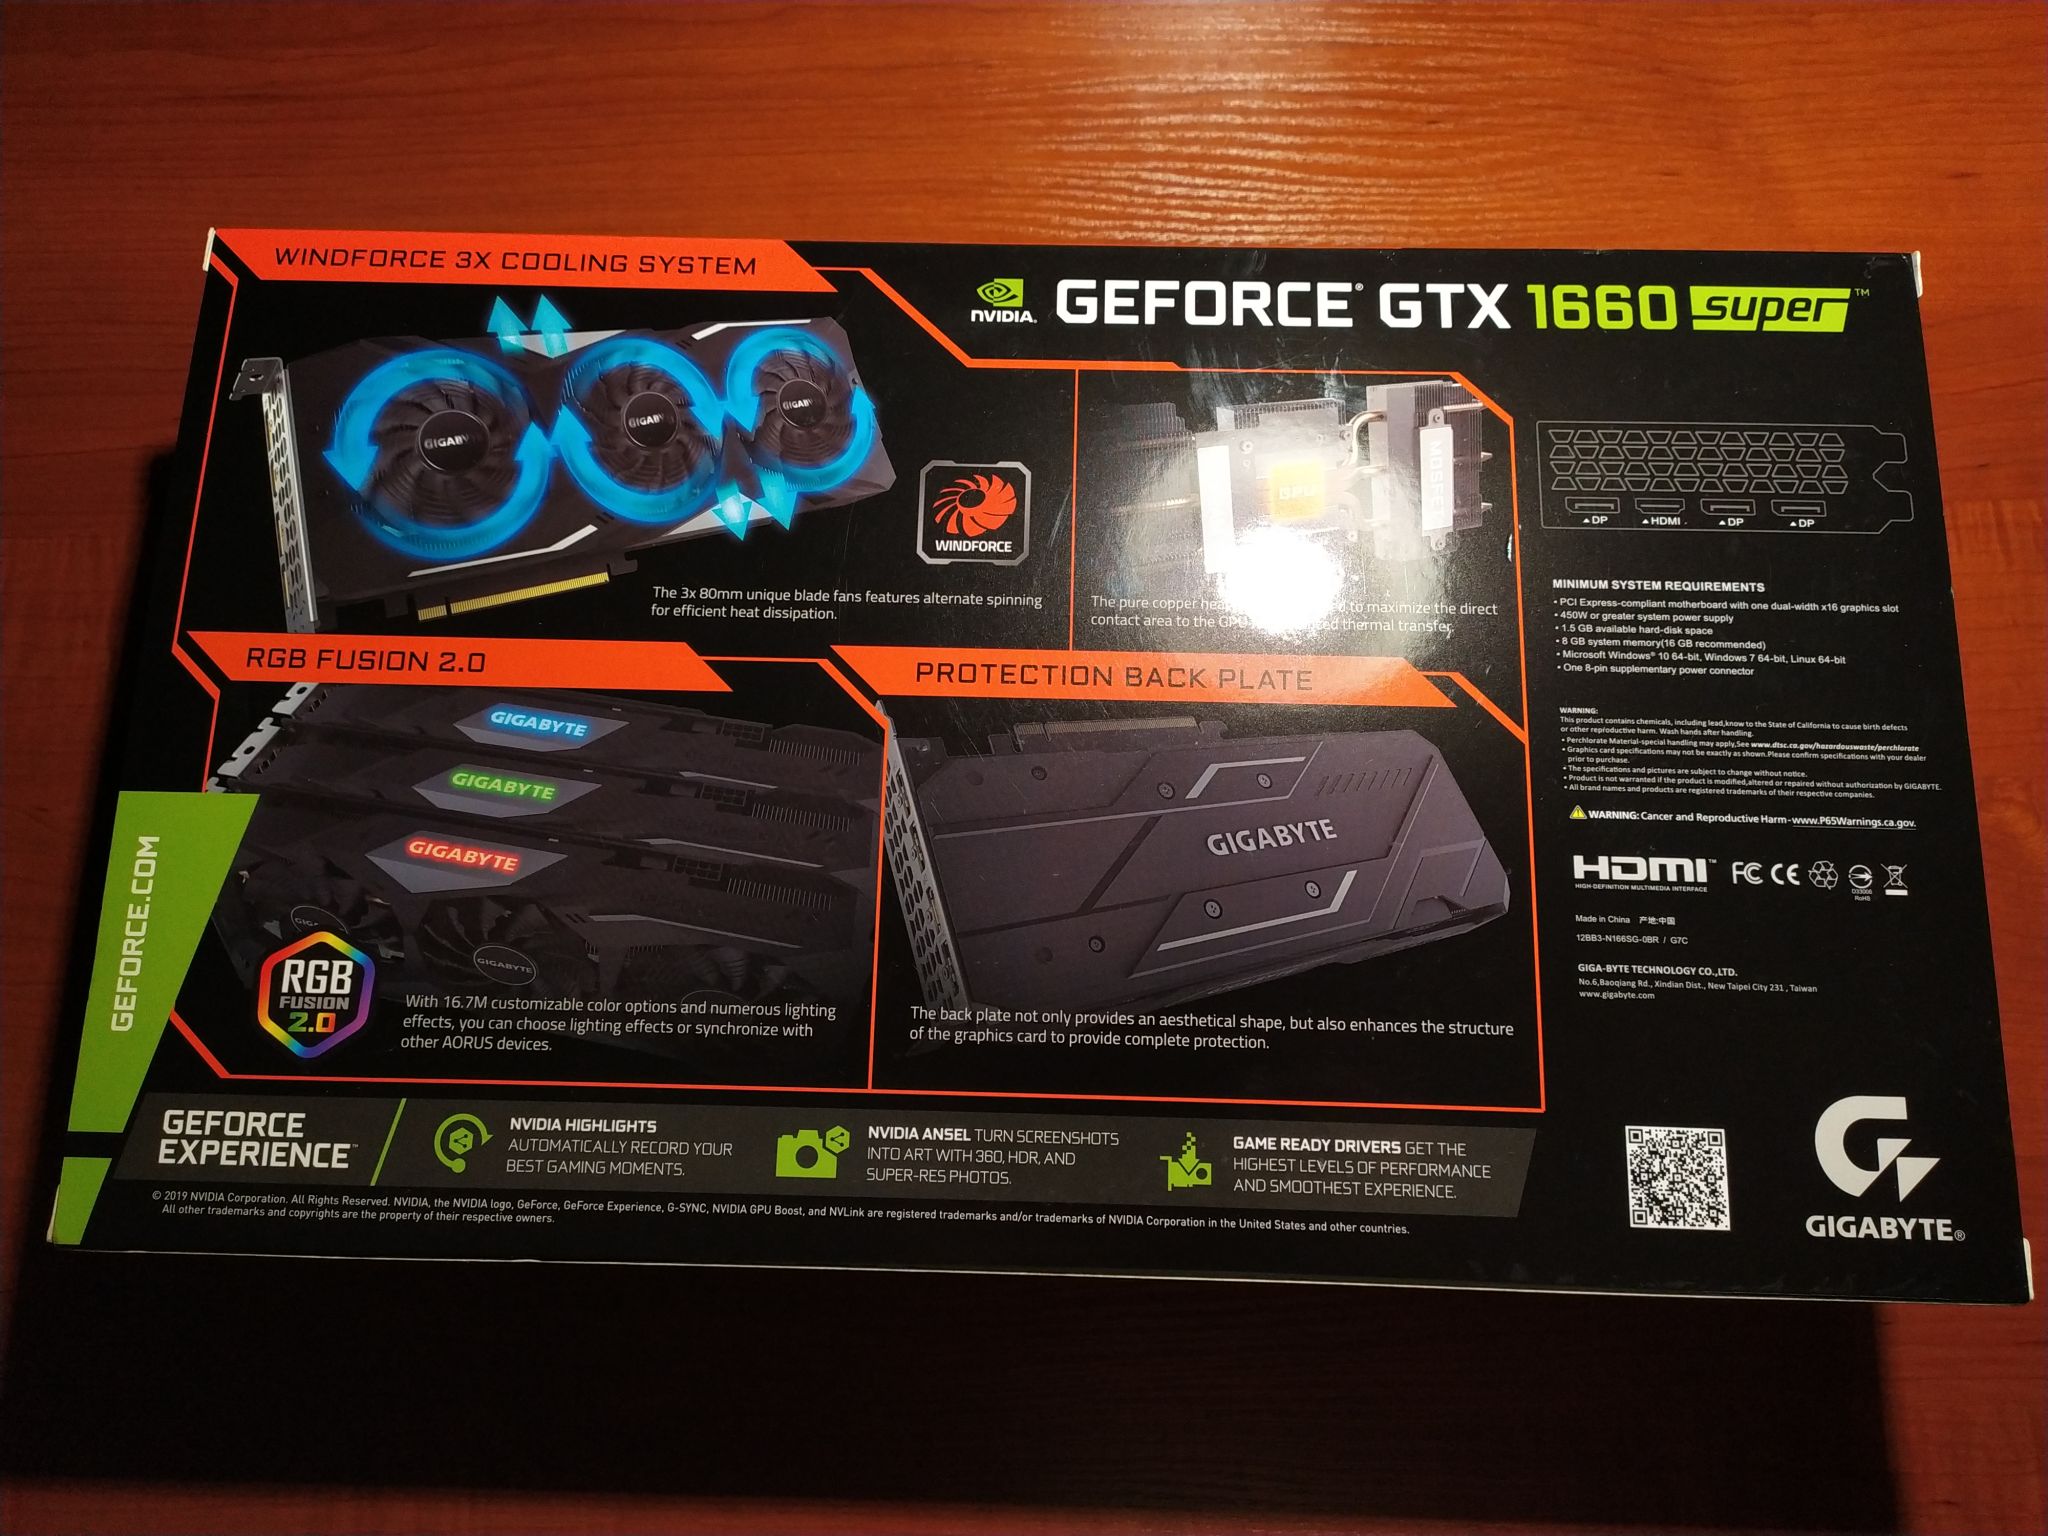 Gigabyte Geforce GTX 1660 Super Review PCTestBench, 45% OFF